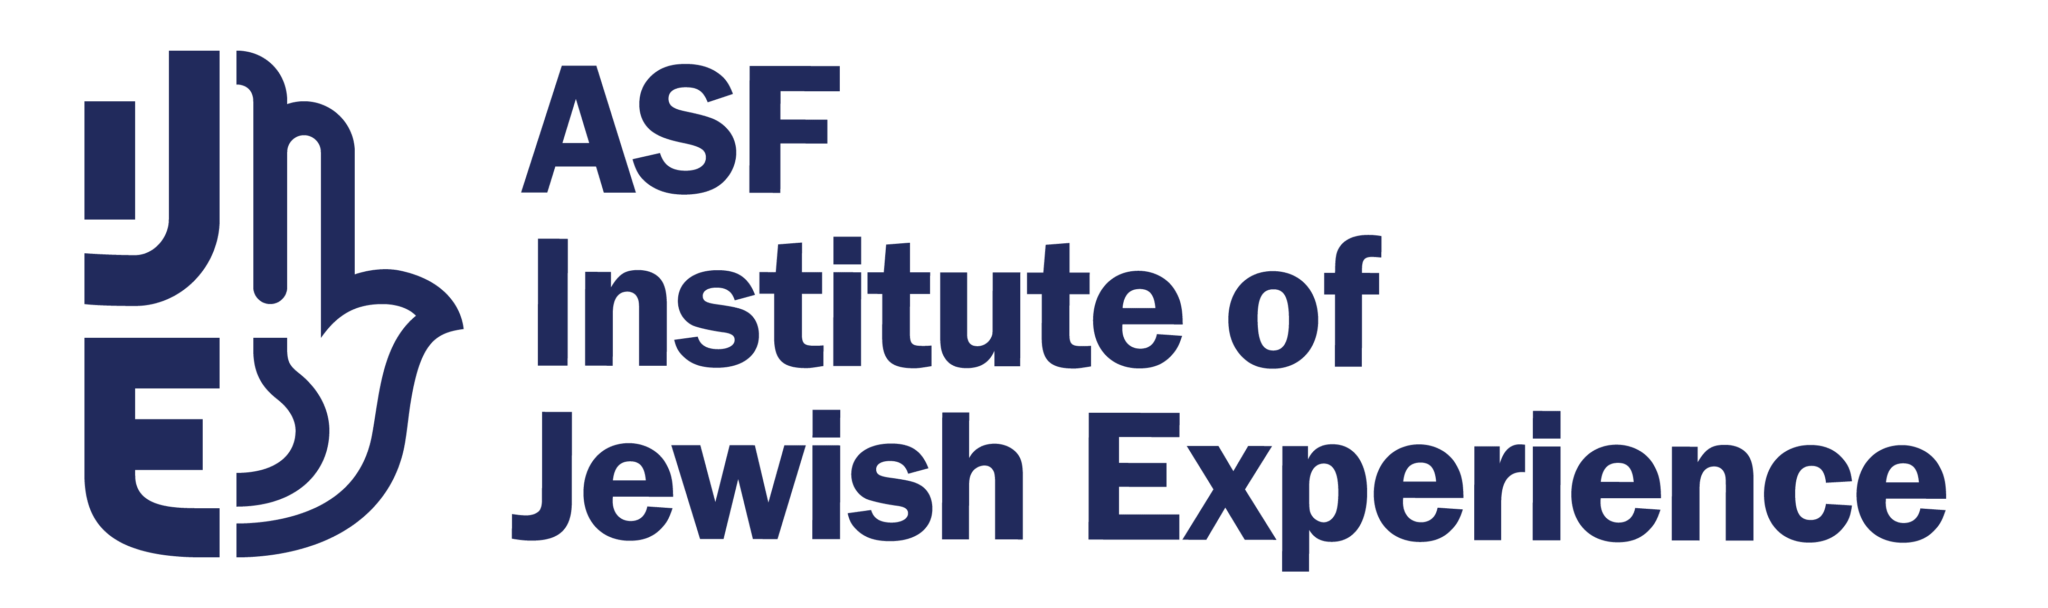 asf-ije logo